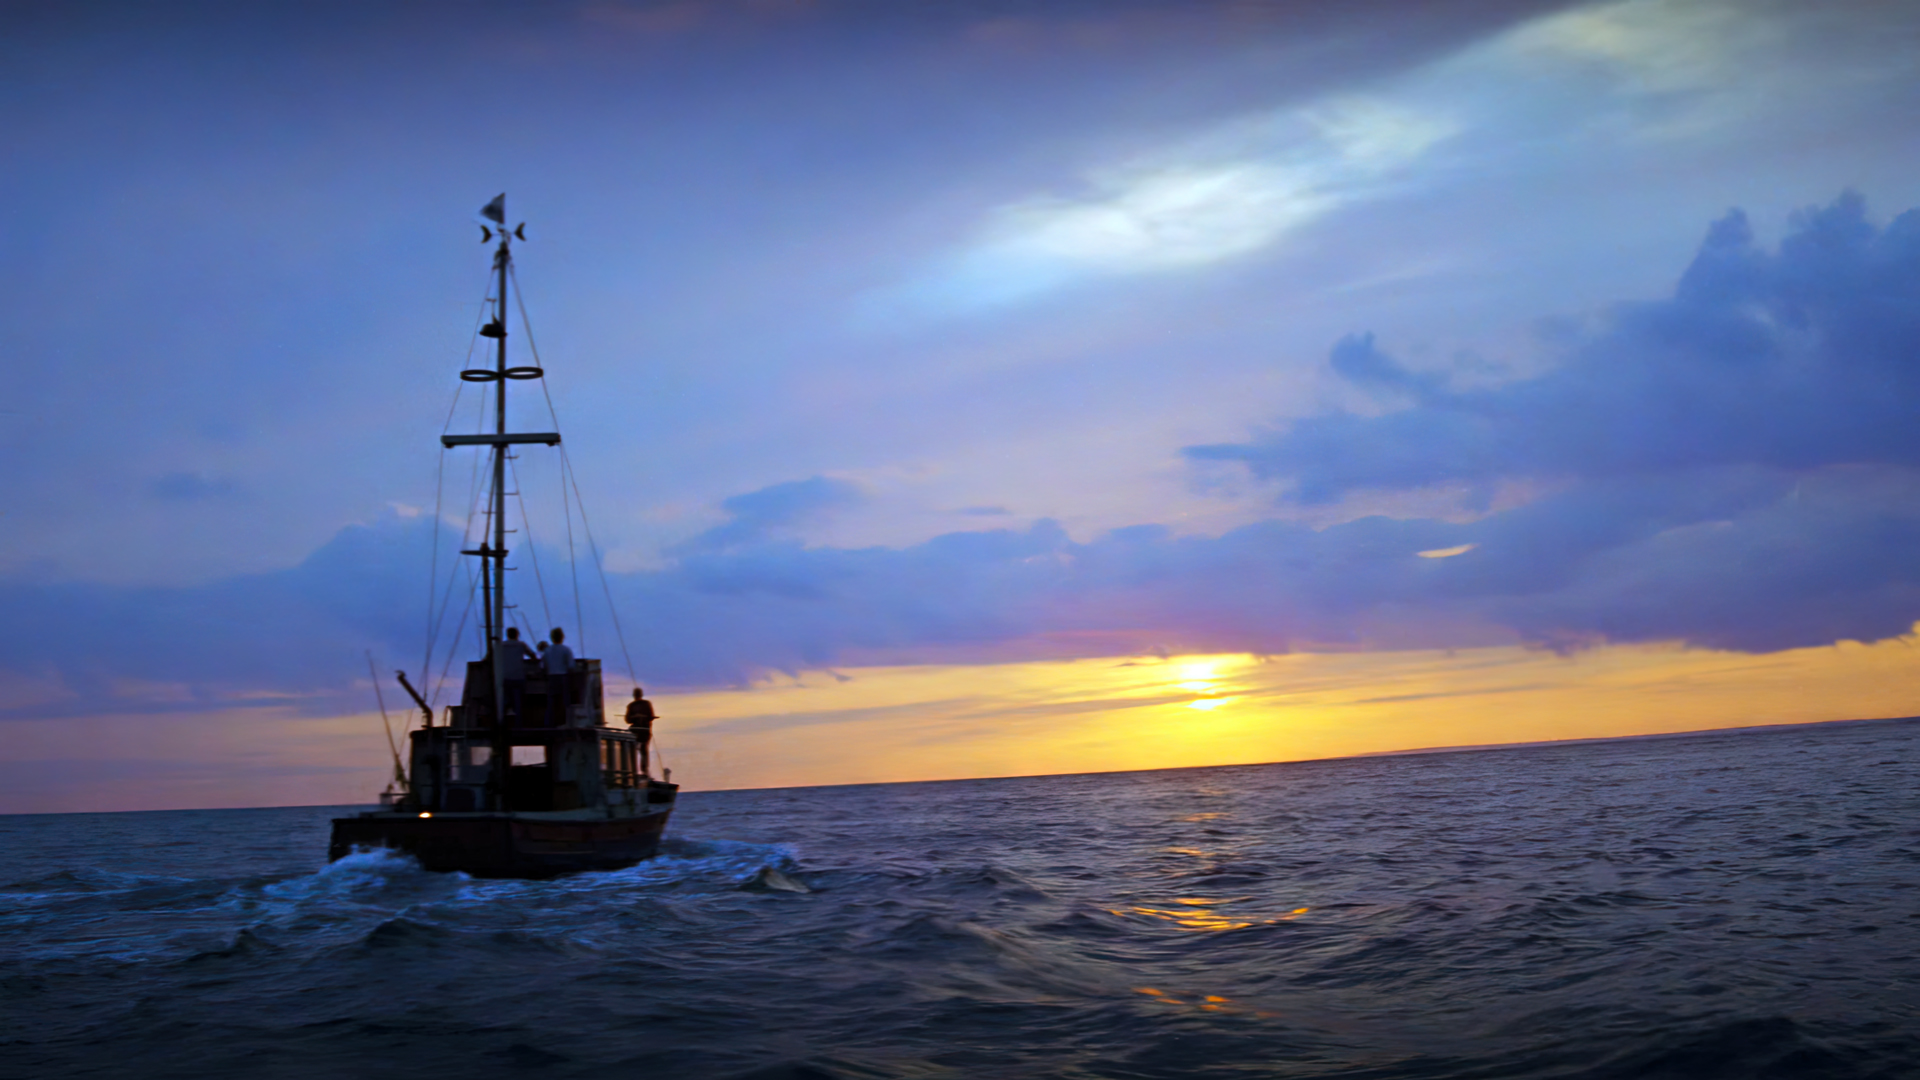 Jaws Movies Film Stills Sea Steven Spielberg Boat Water Sunset Clouds Sky 1920x1080